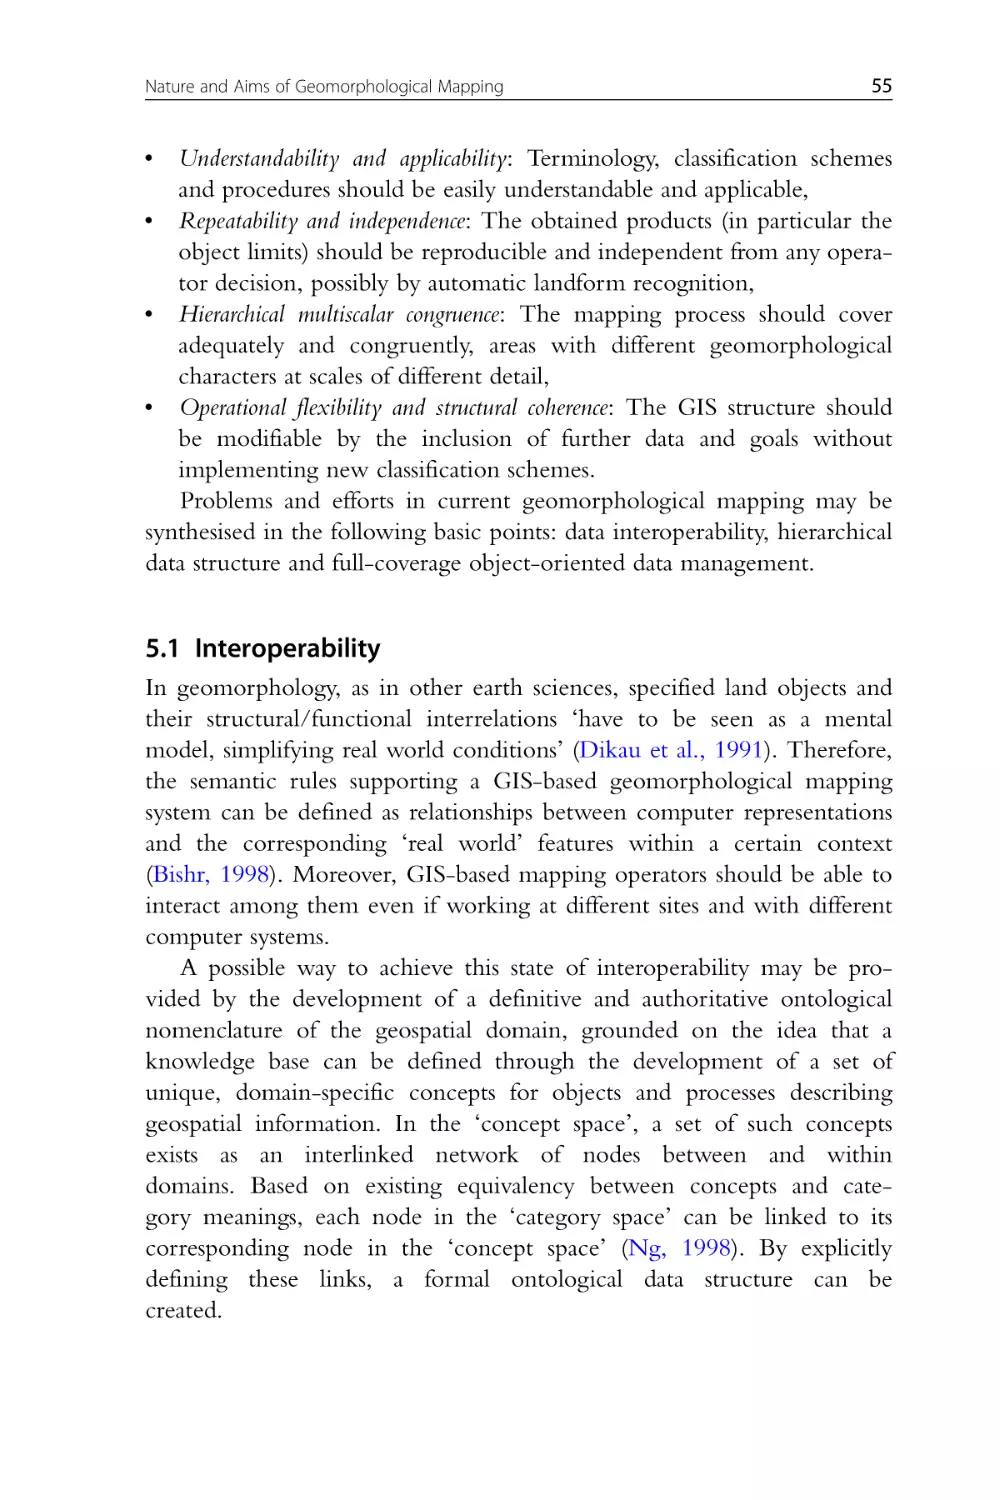 5.1 Interoperability